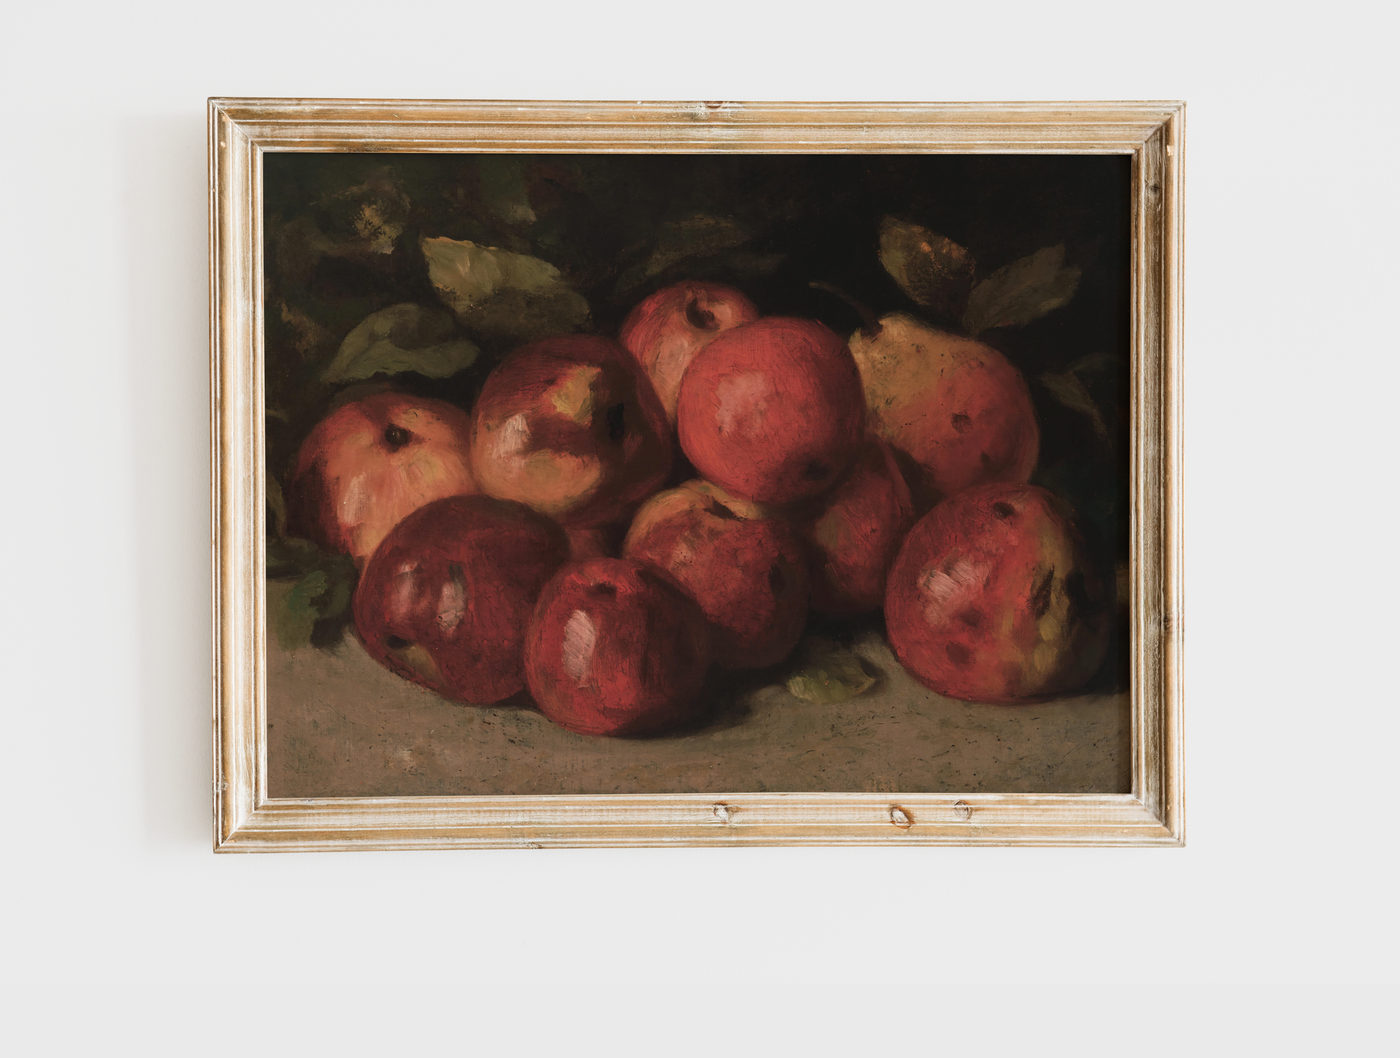 Apple Painting Print